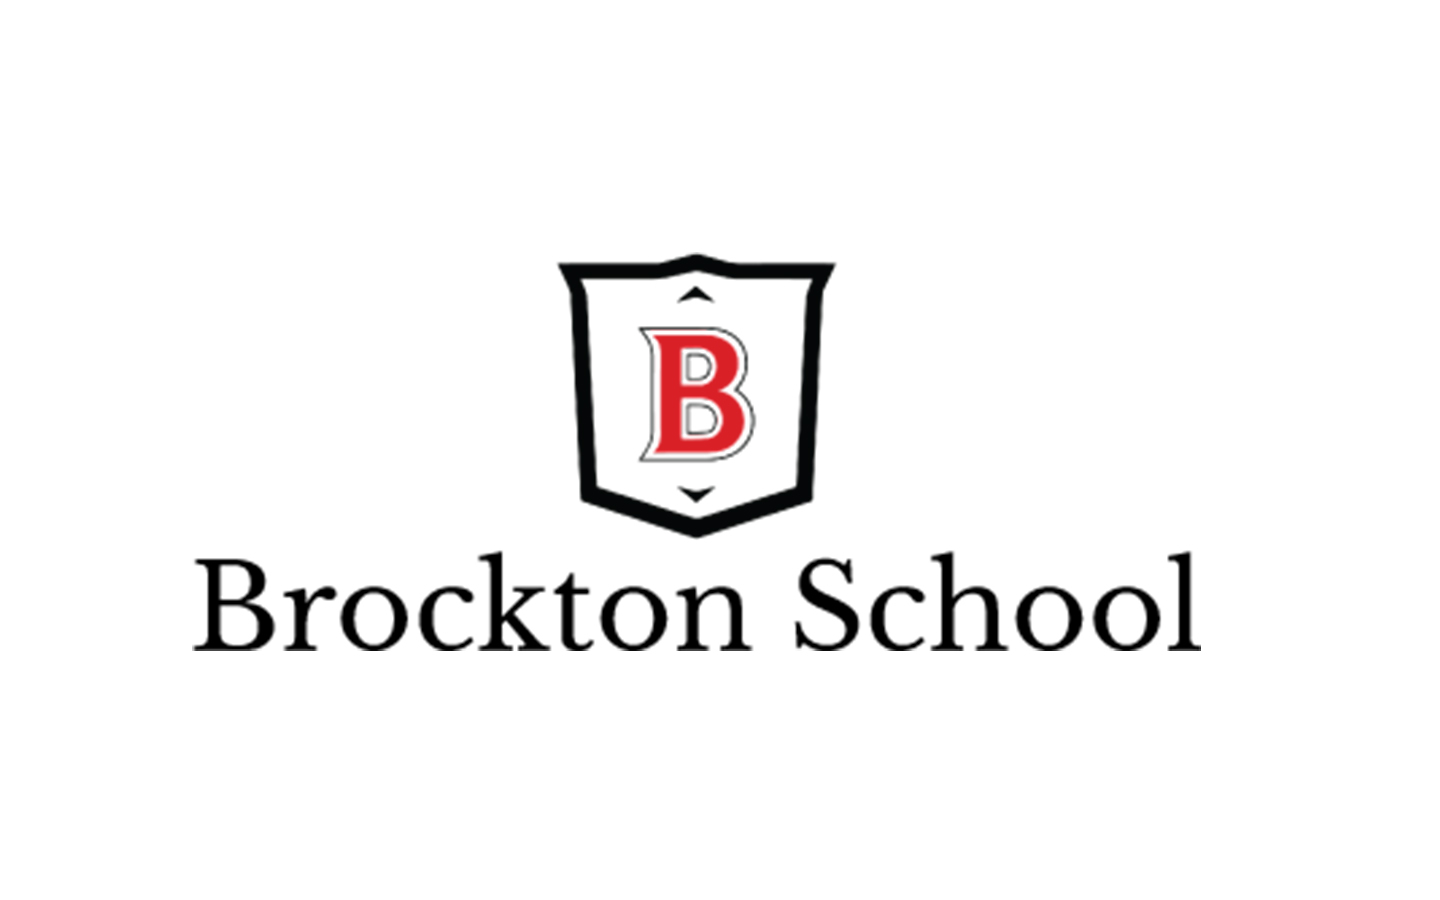 Brockton School Boundary Training